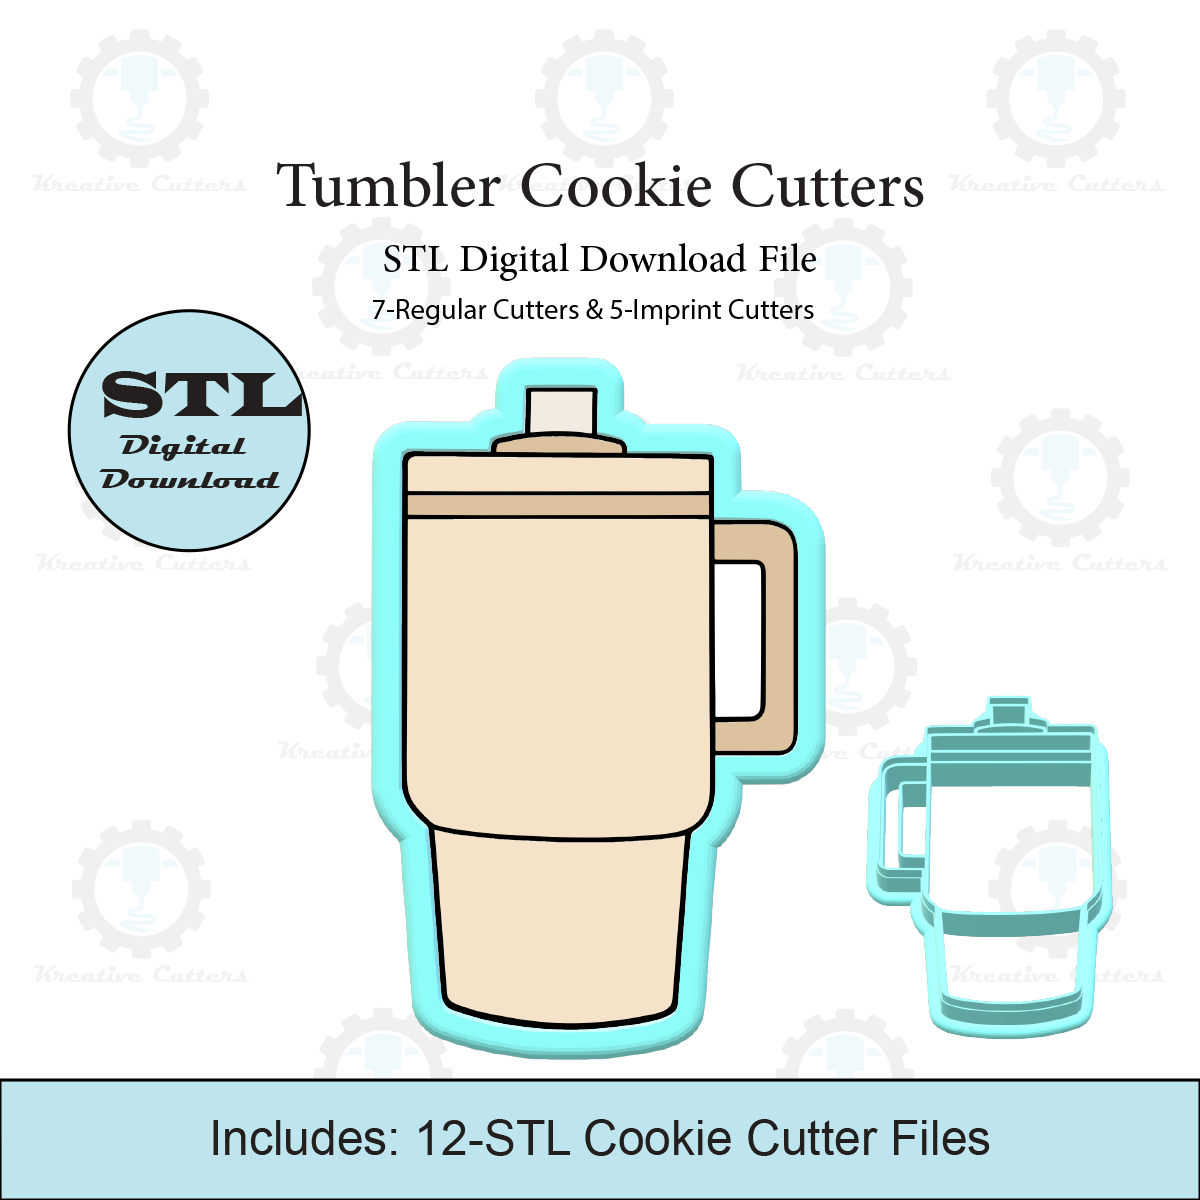 Tumbler Cookie Cutters | Standard & Imprint Cutters Included | STL Files